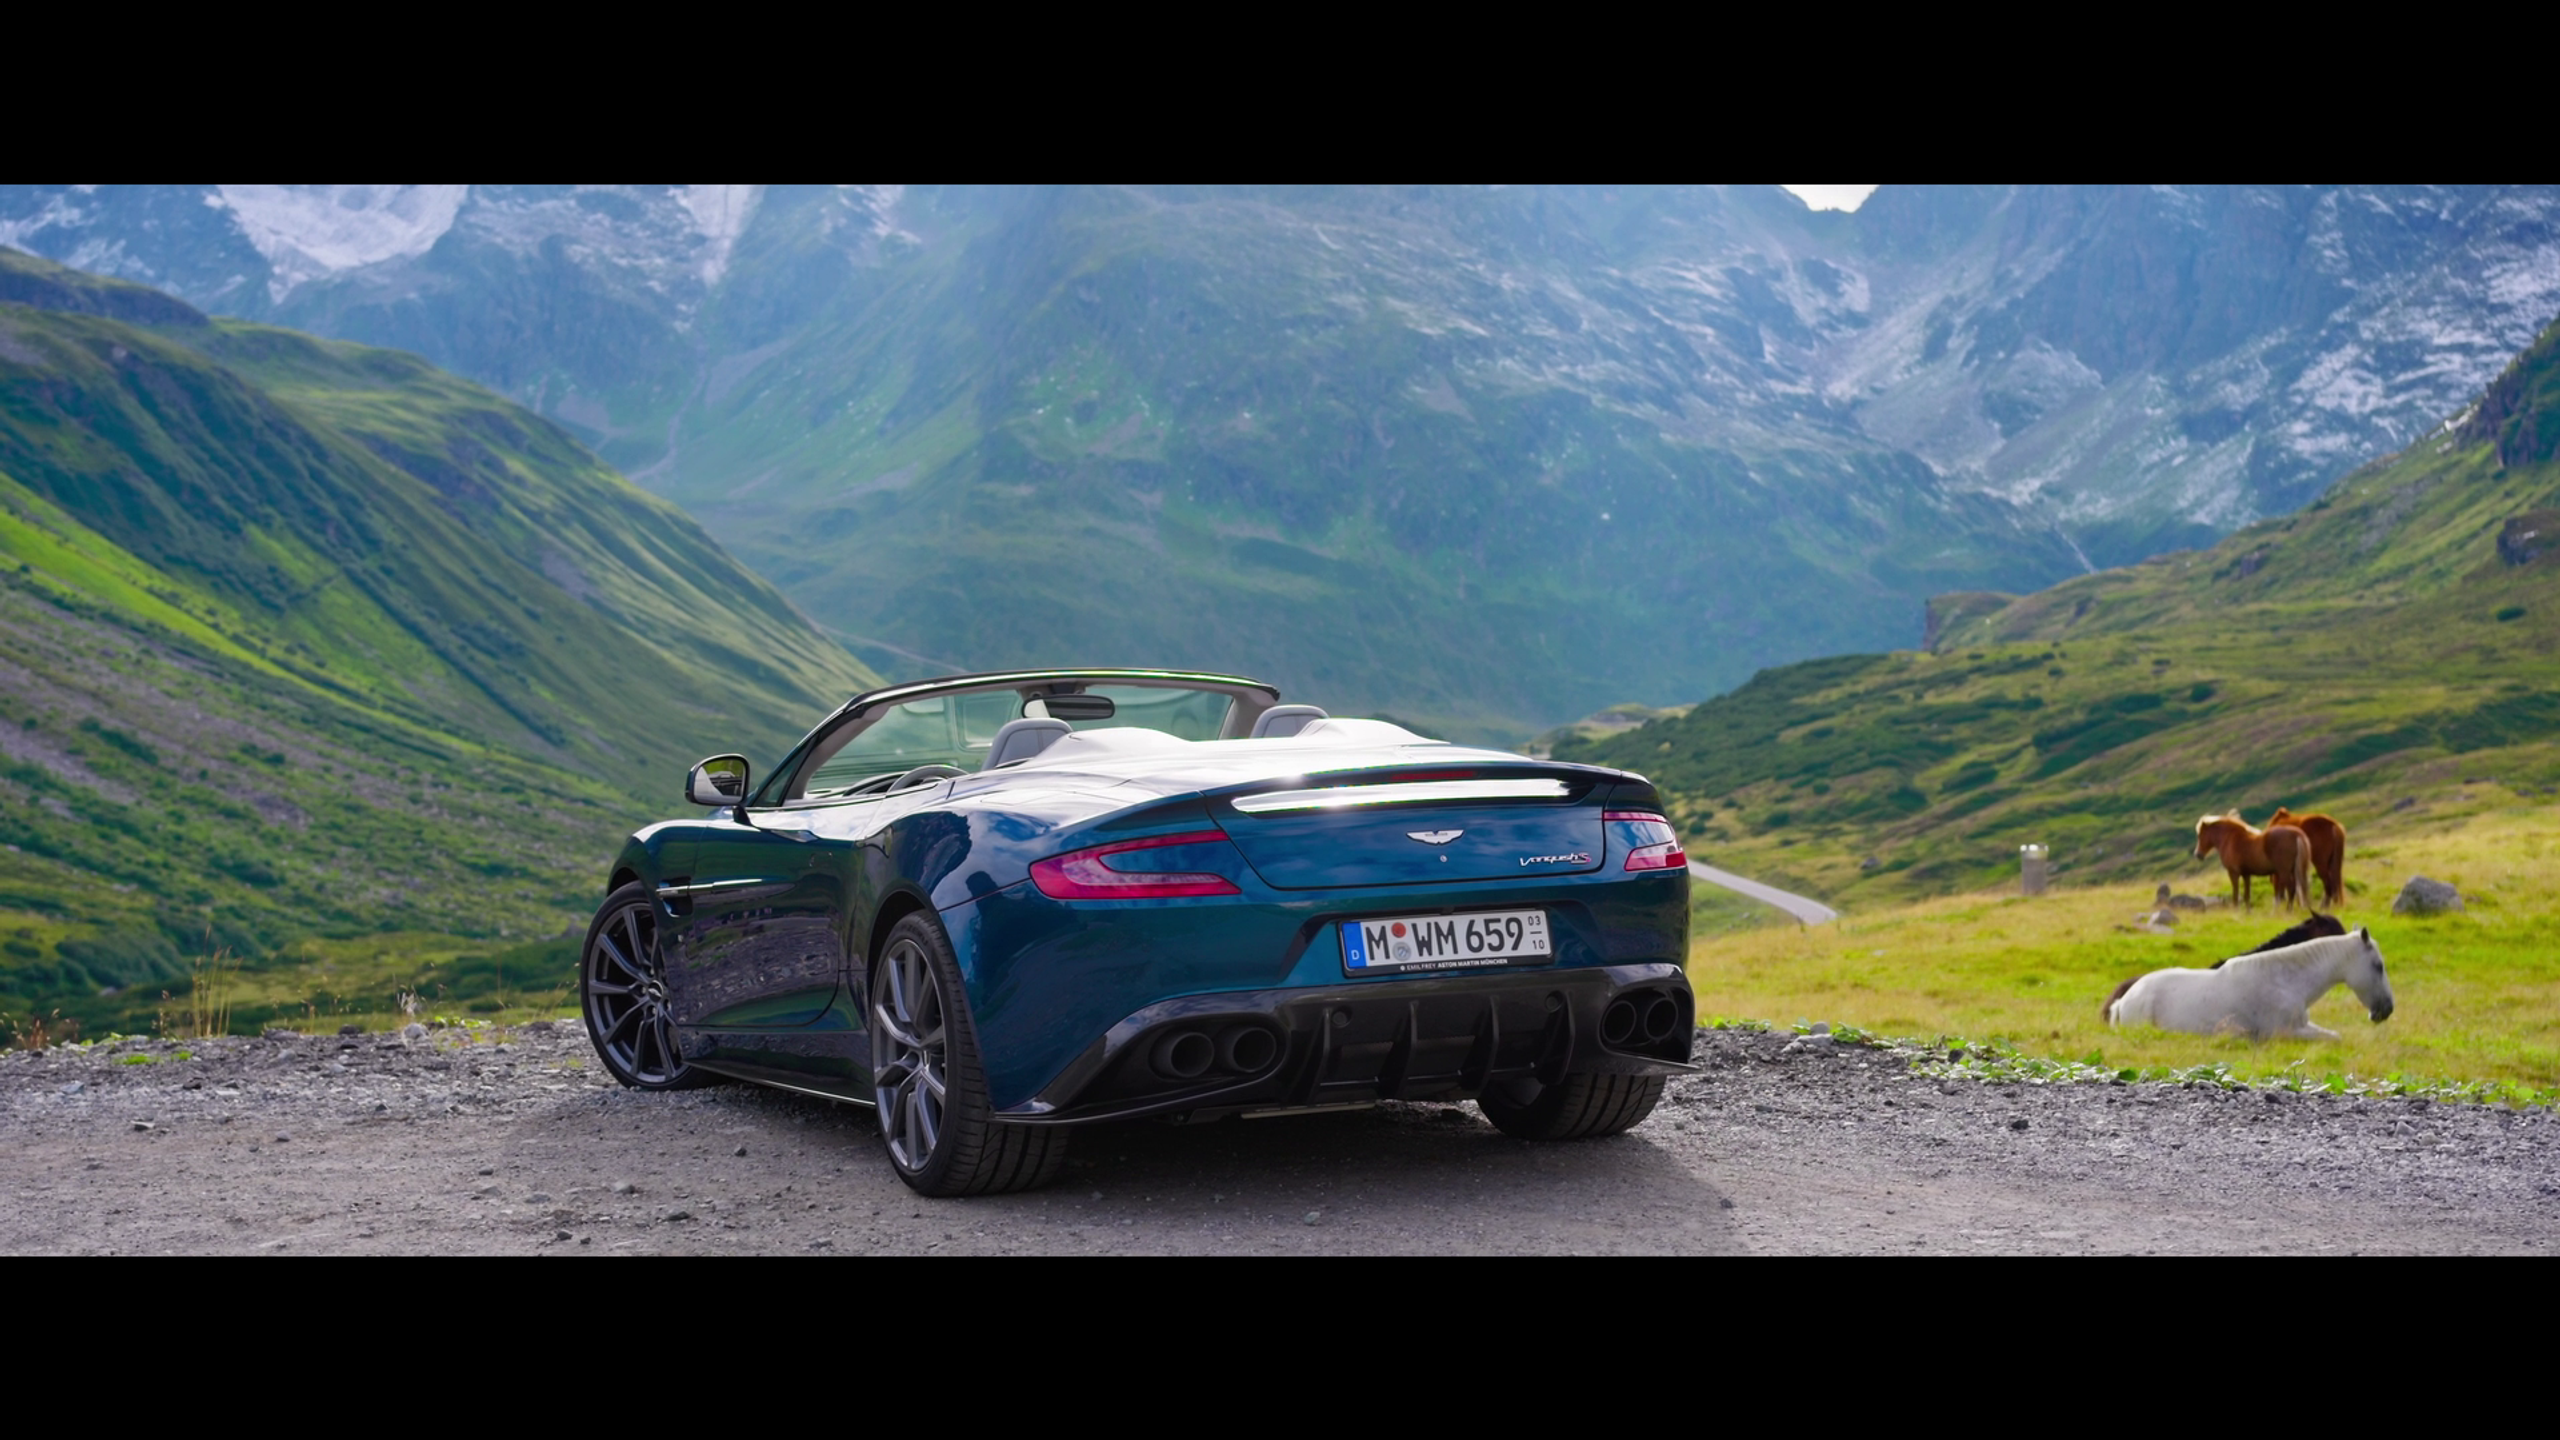 Aston Martin Shortfilm: A Day on the Silvrettapass